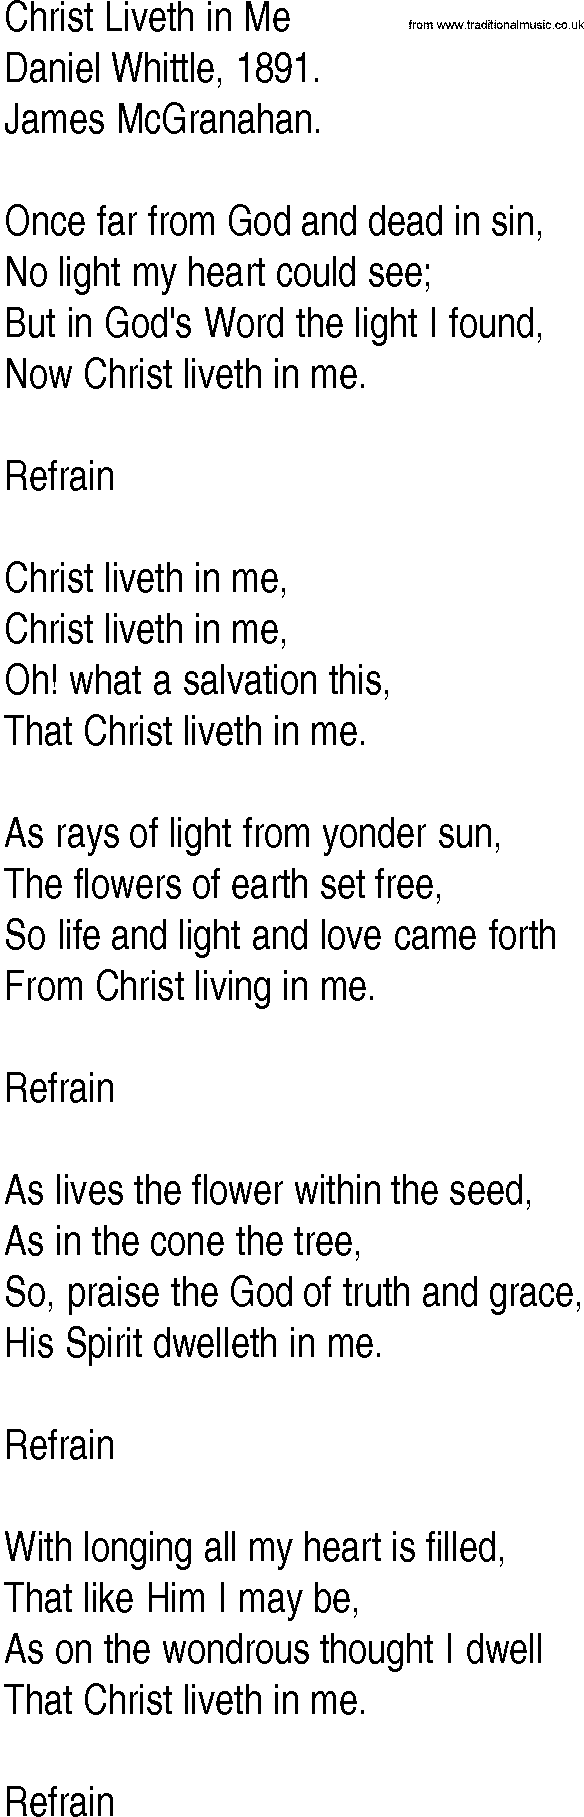 Hymn and Gospel Song: Christ Liveth in Me by Daniel Whittle lyrics